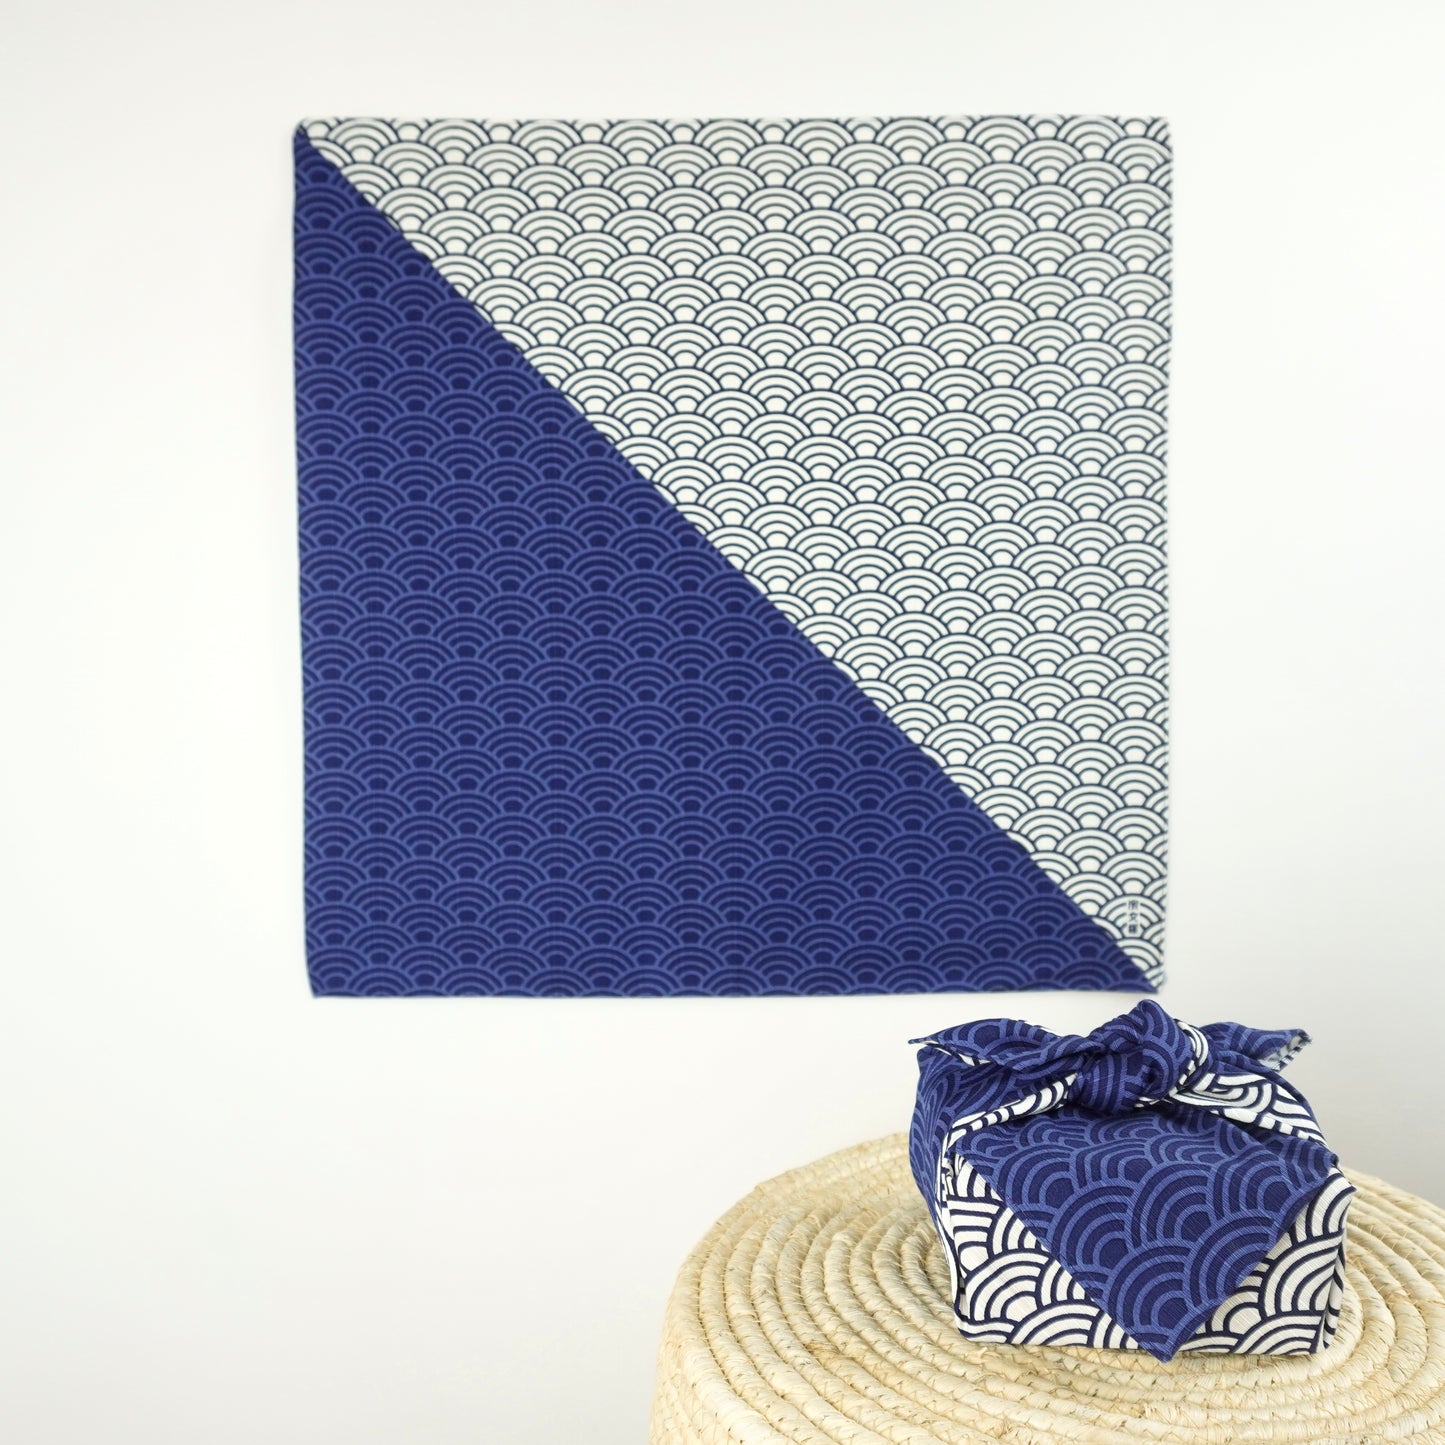 Furoshiki, Japanese Wrapping Cloth, Furoshiki Gift Wrap, Navy & White Waves, 50cm x 50cm no